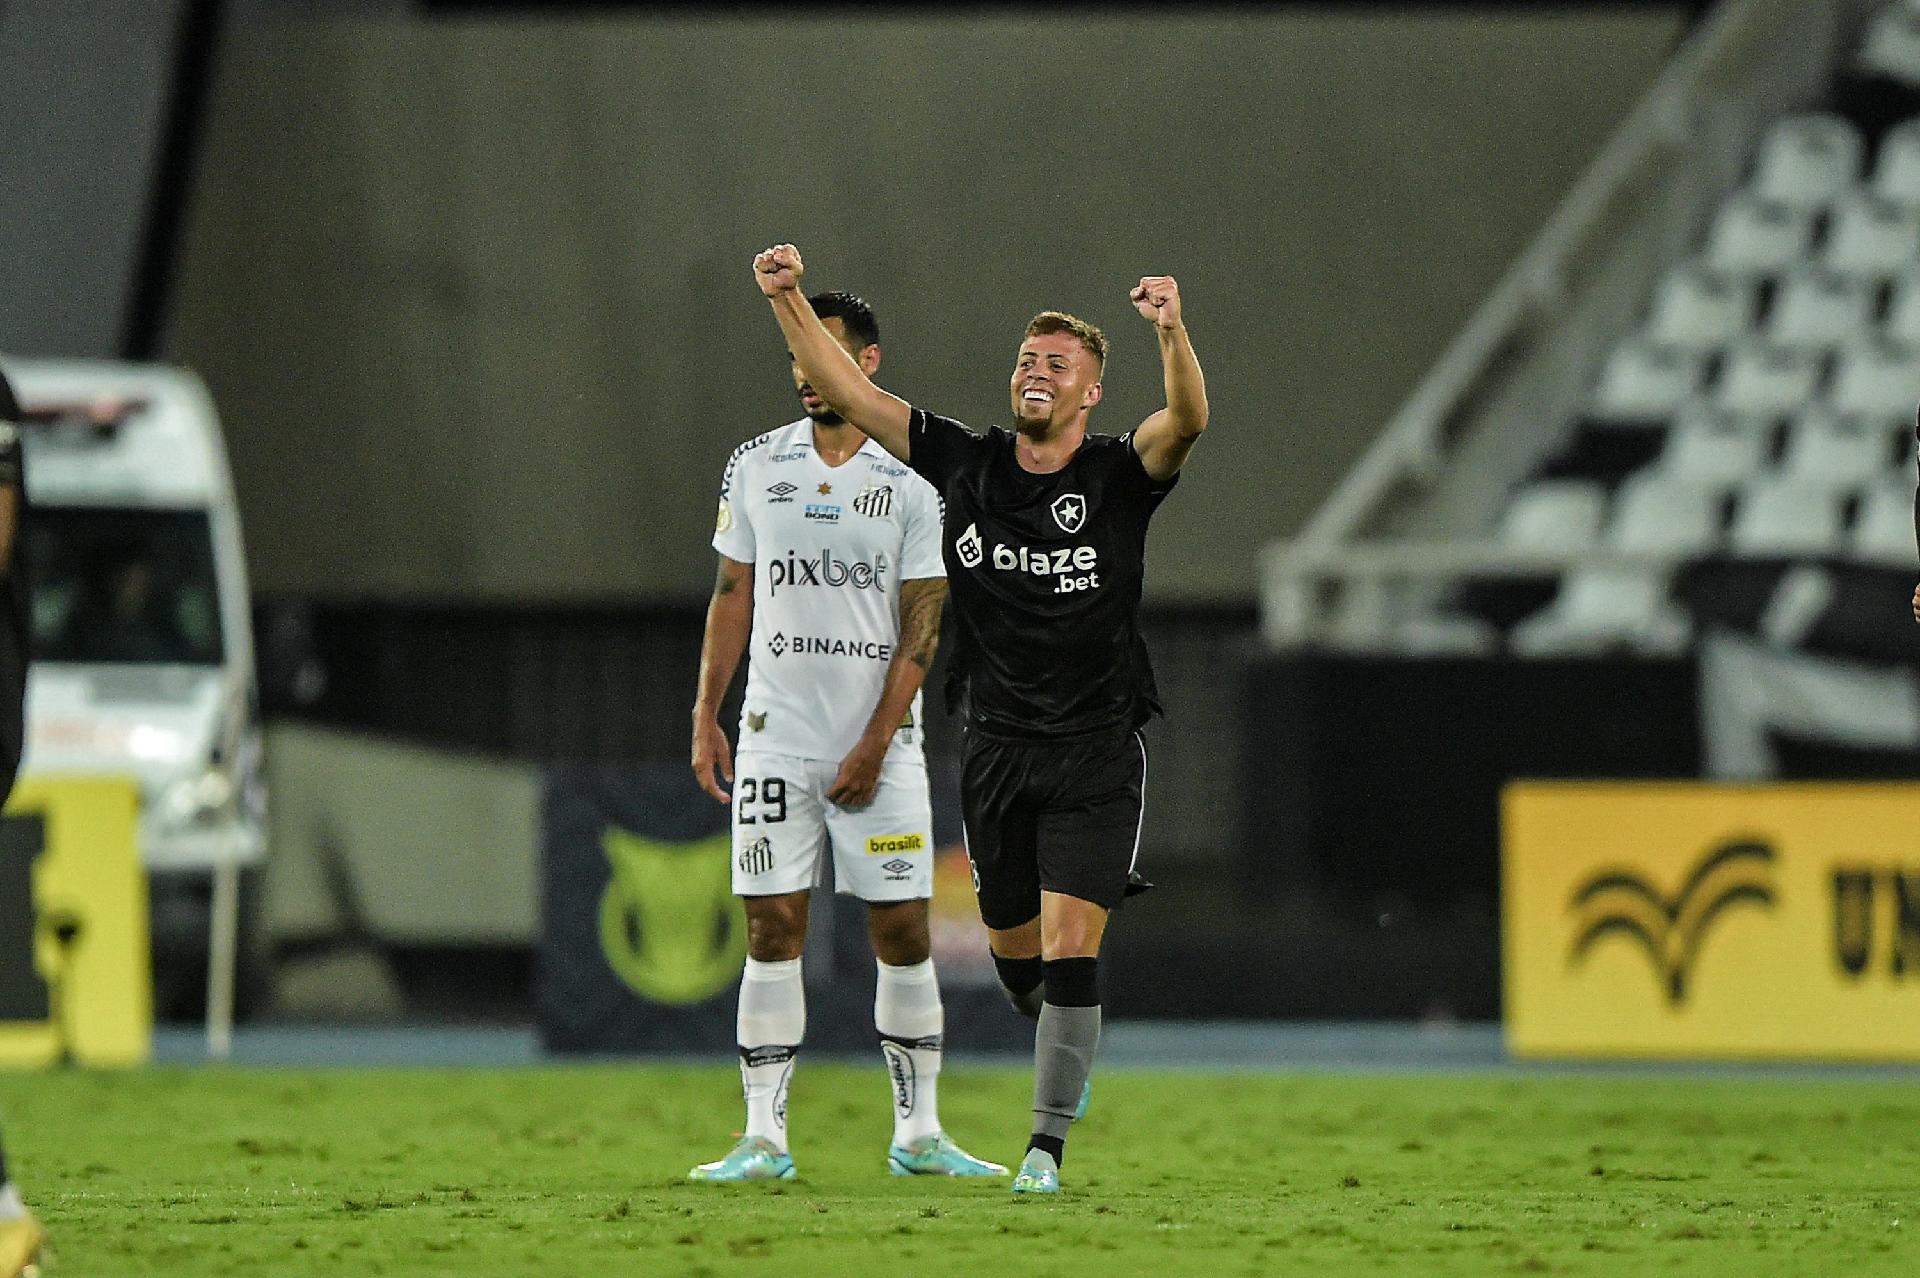 Corinthians 4 x 0 Santos, Gols + pós-jogo